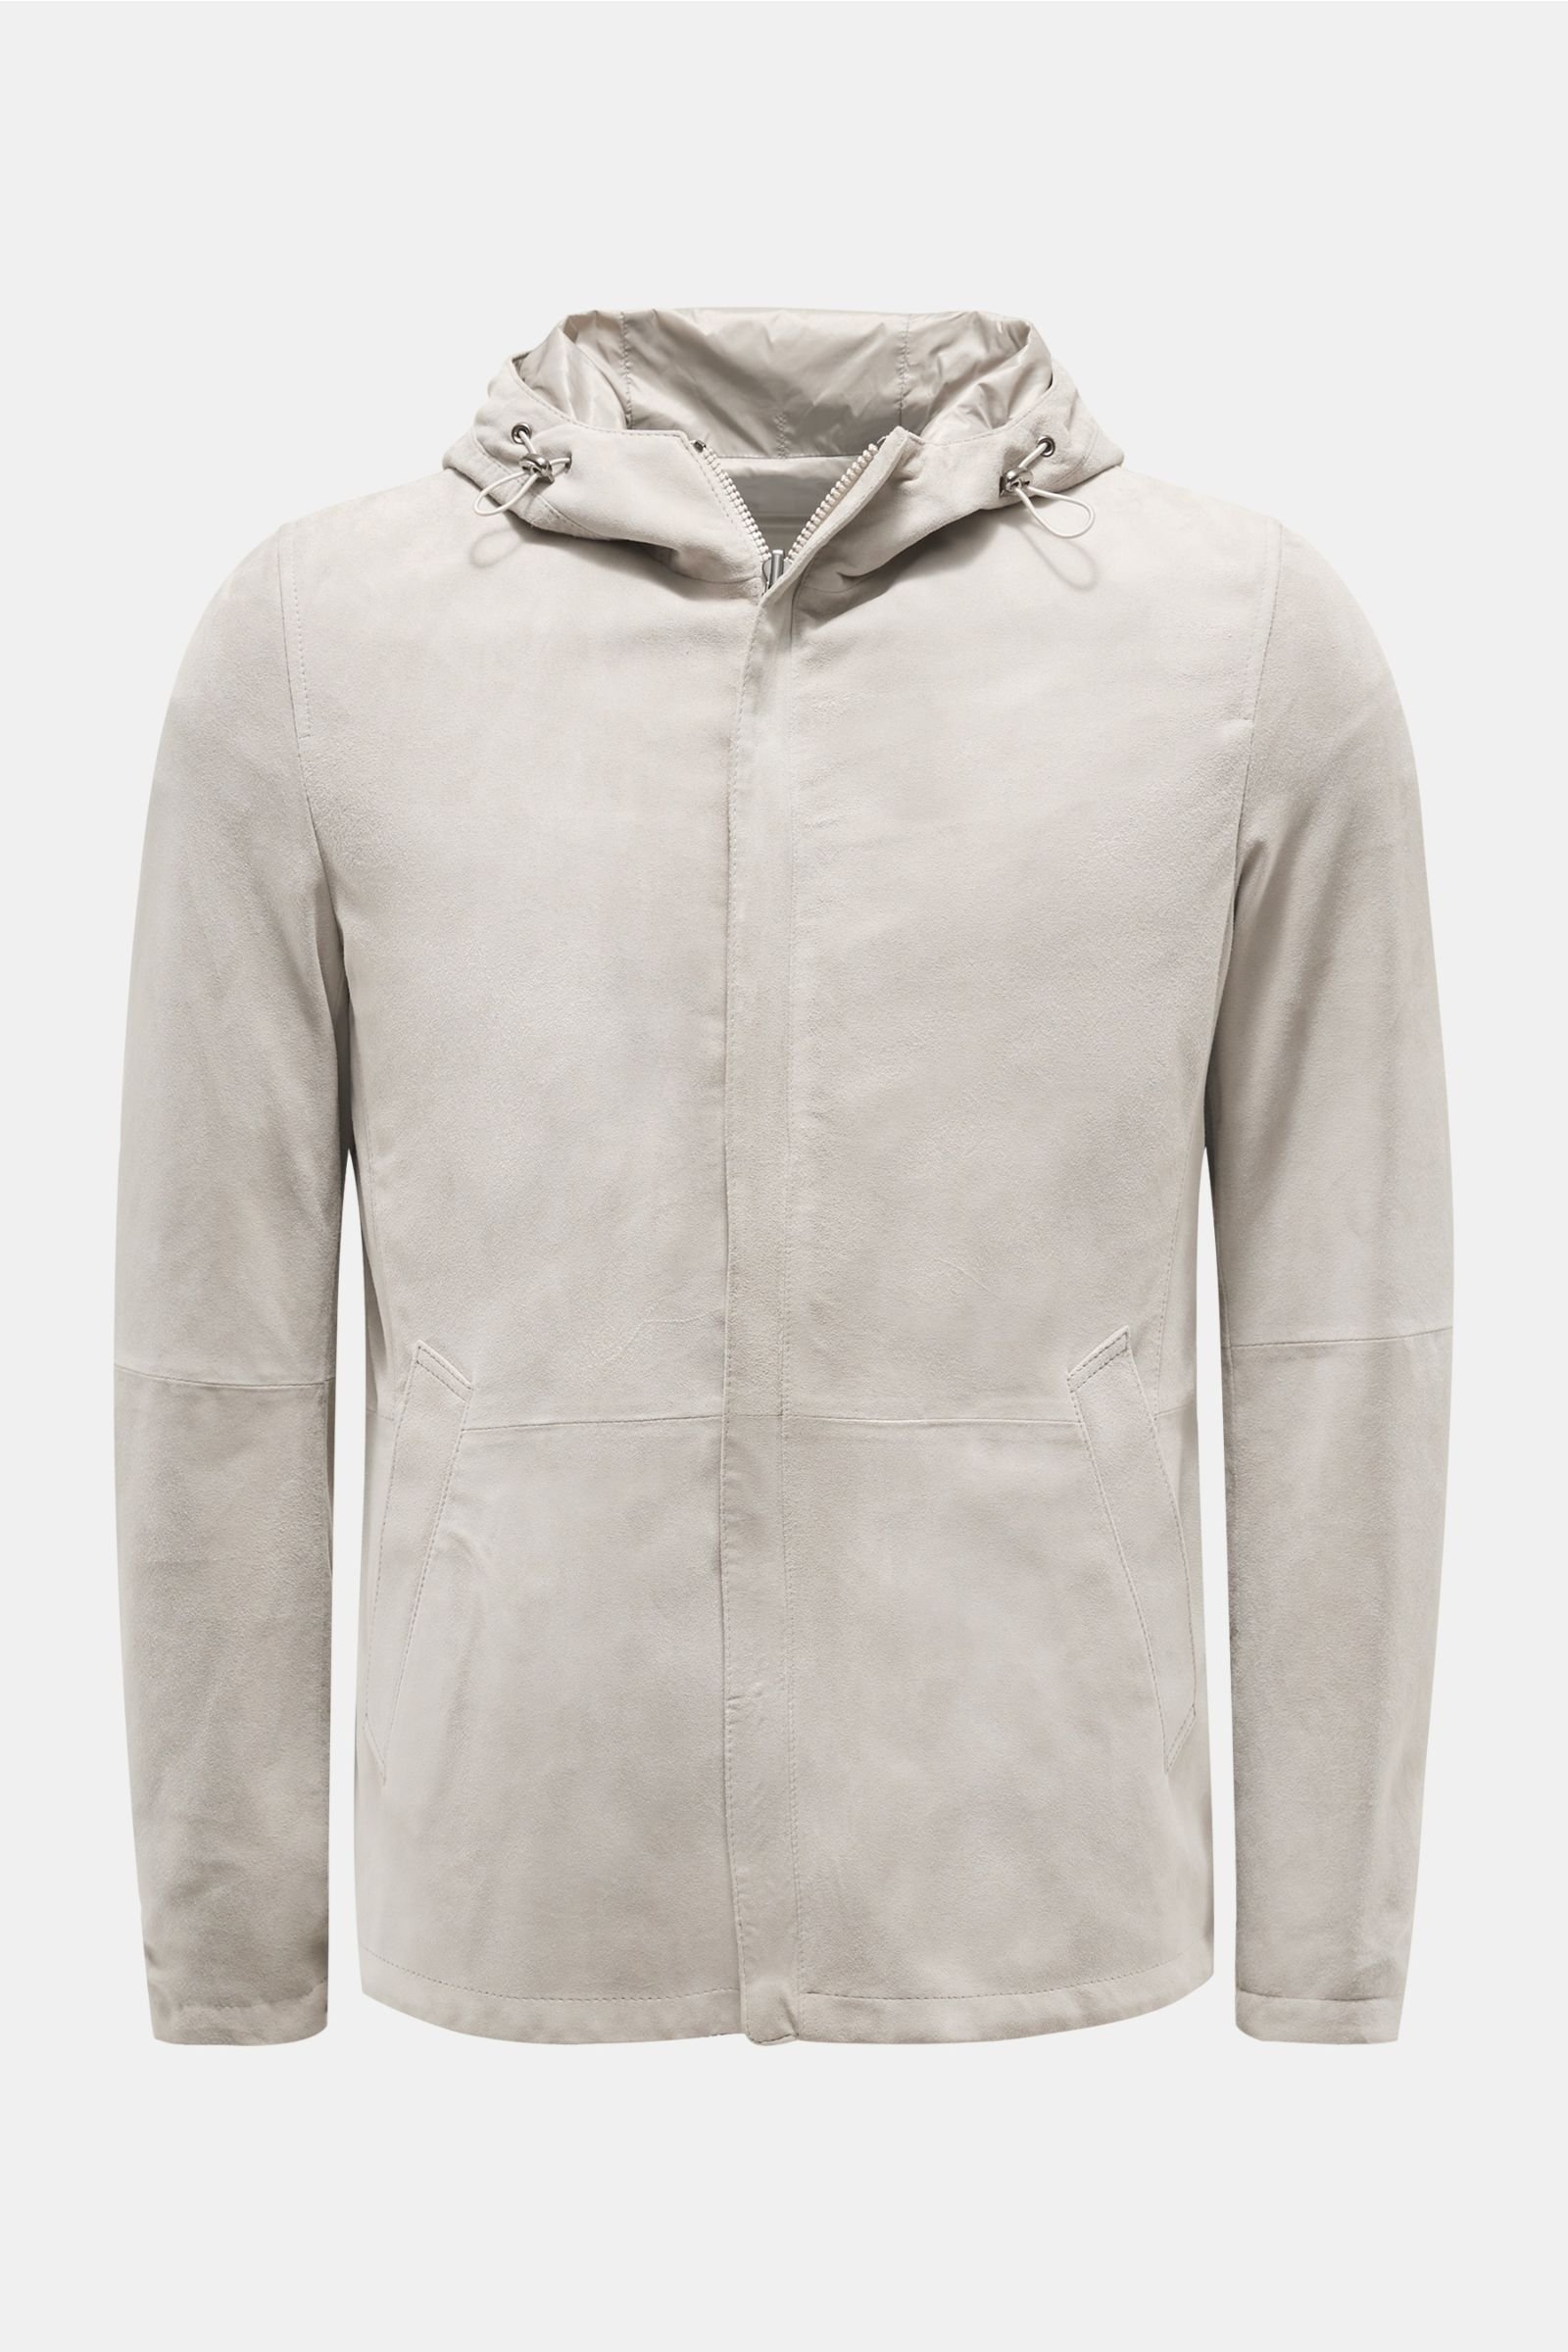 Suede reversible jacket light grey/grey-blue